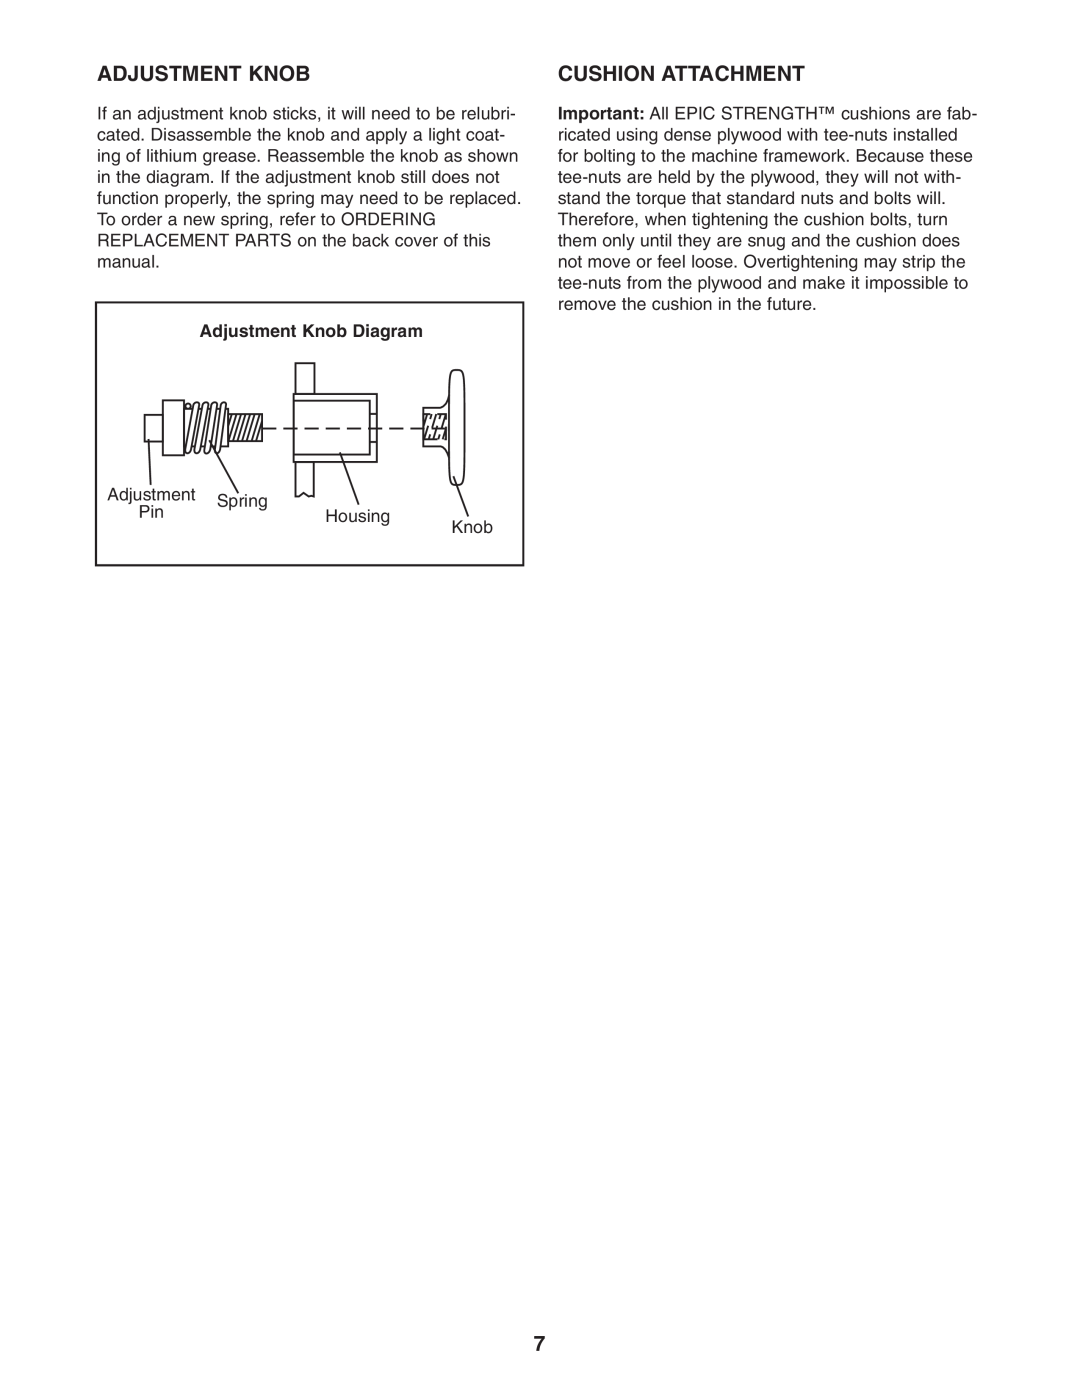 Epic Fitness GZFW20611 manual Cushion Attachment, Adjustment Knob Diagram 